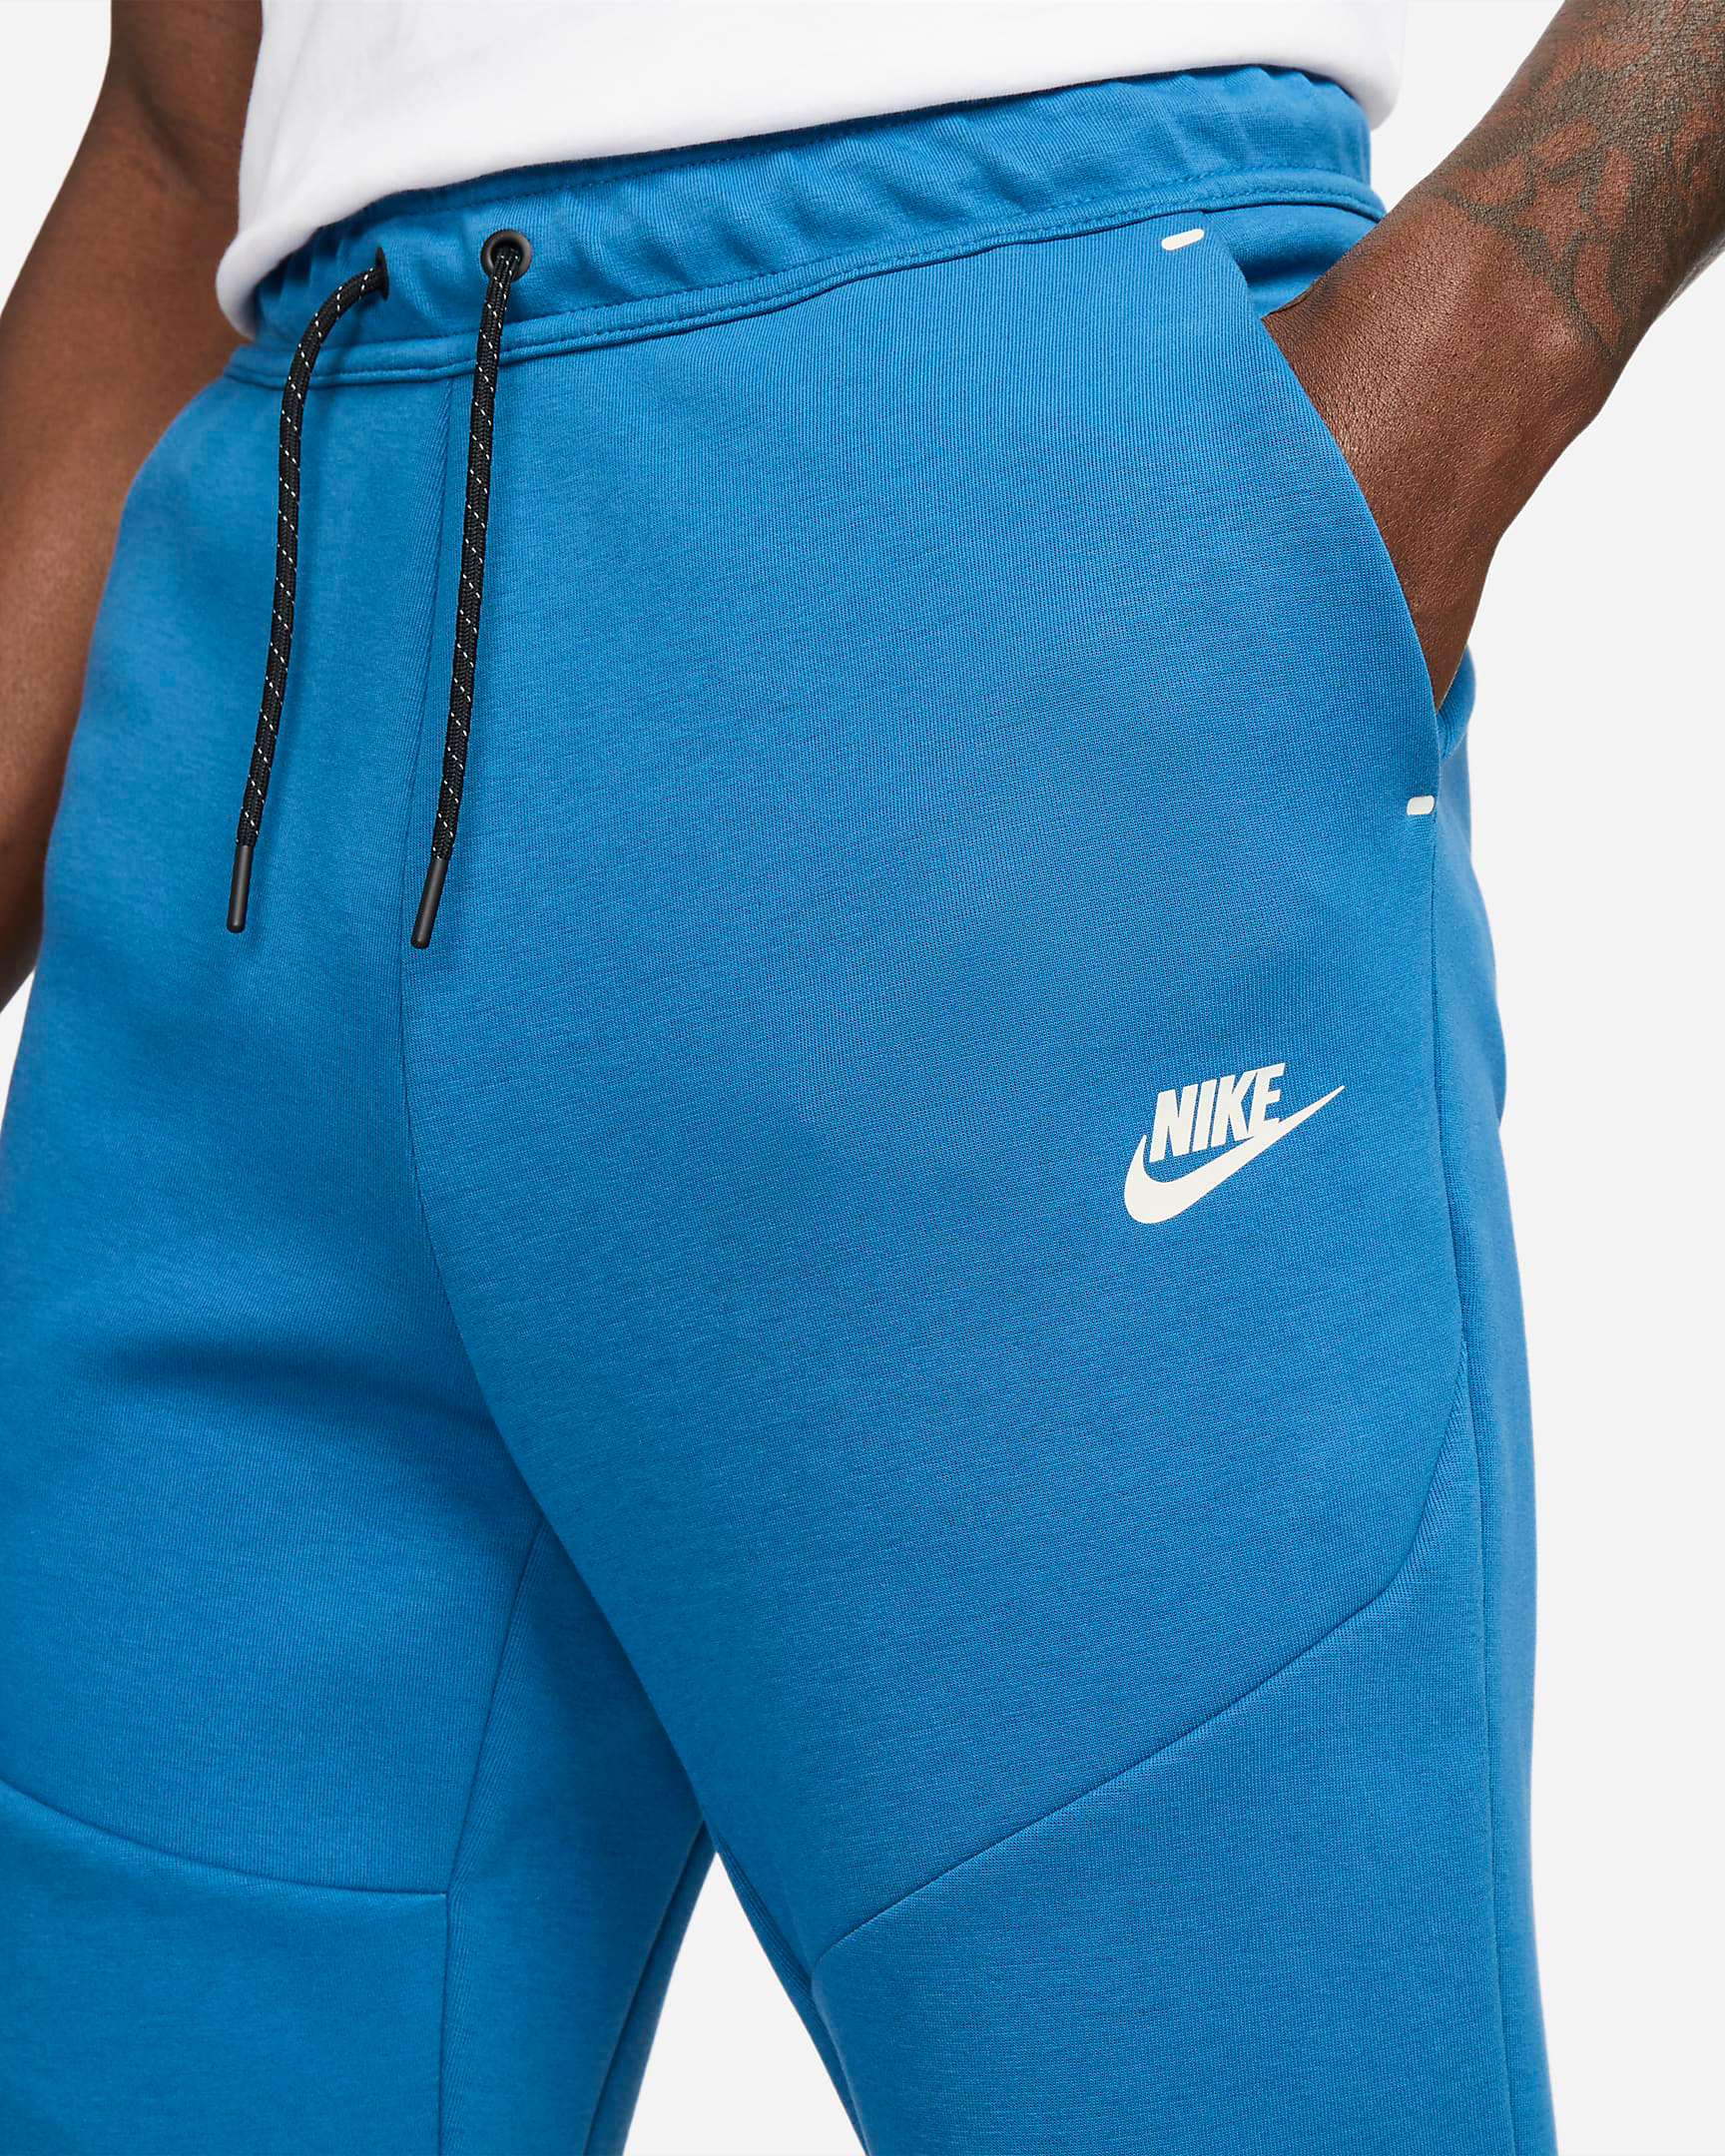 nike-tech-fleece-joggers-pants-dark-marina-blue-3